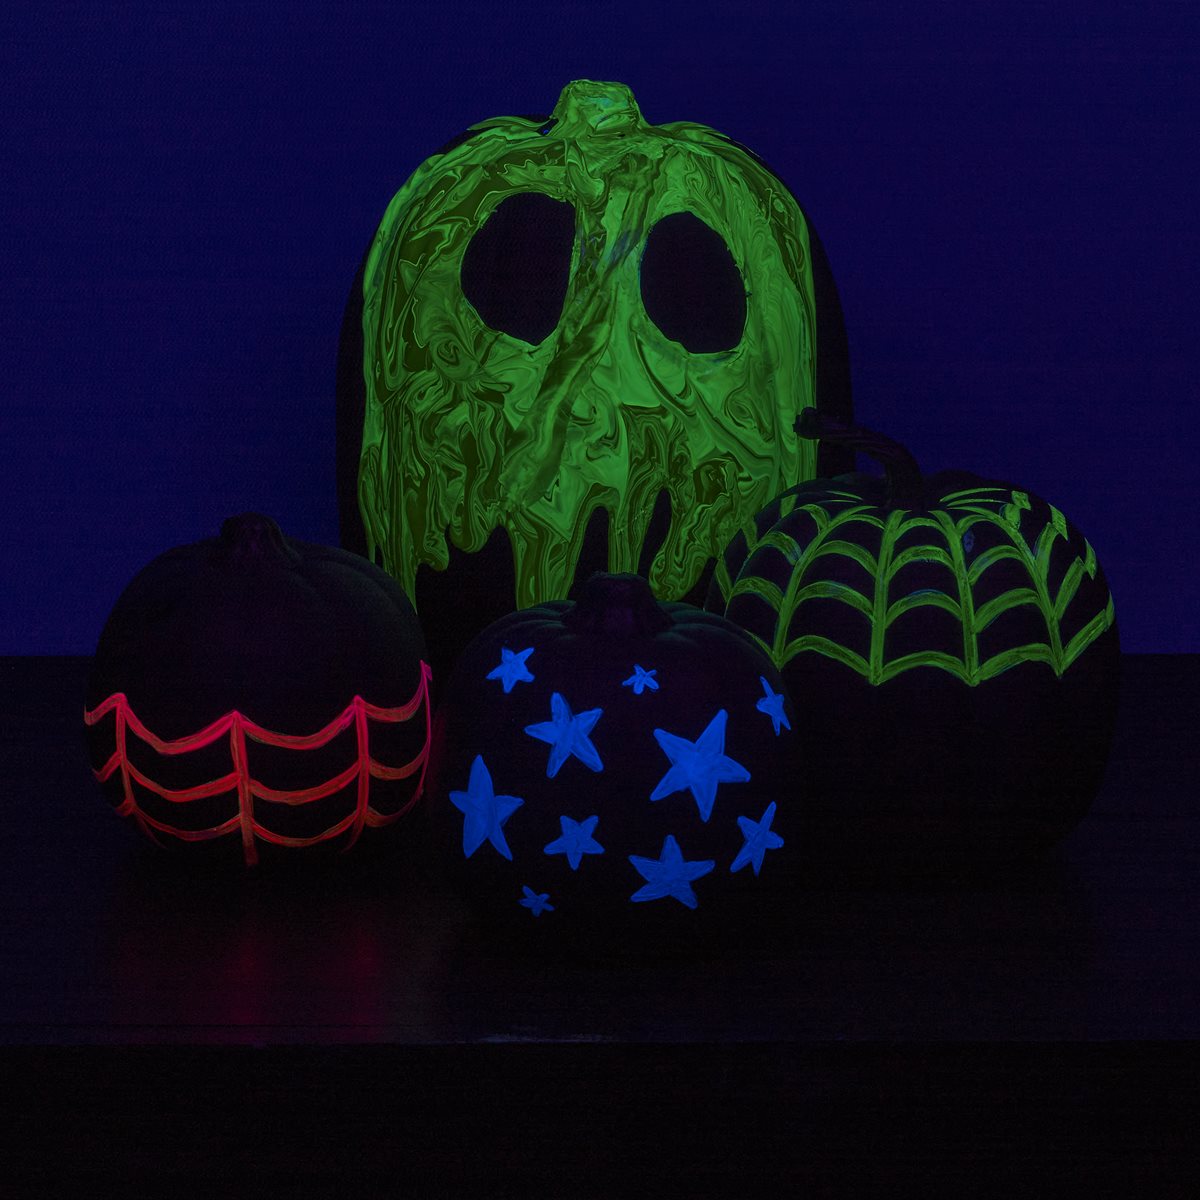 Glow-in-the-Dark Pumpkins